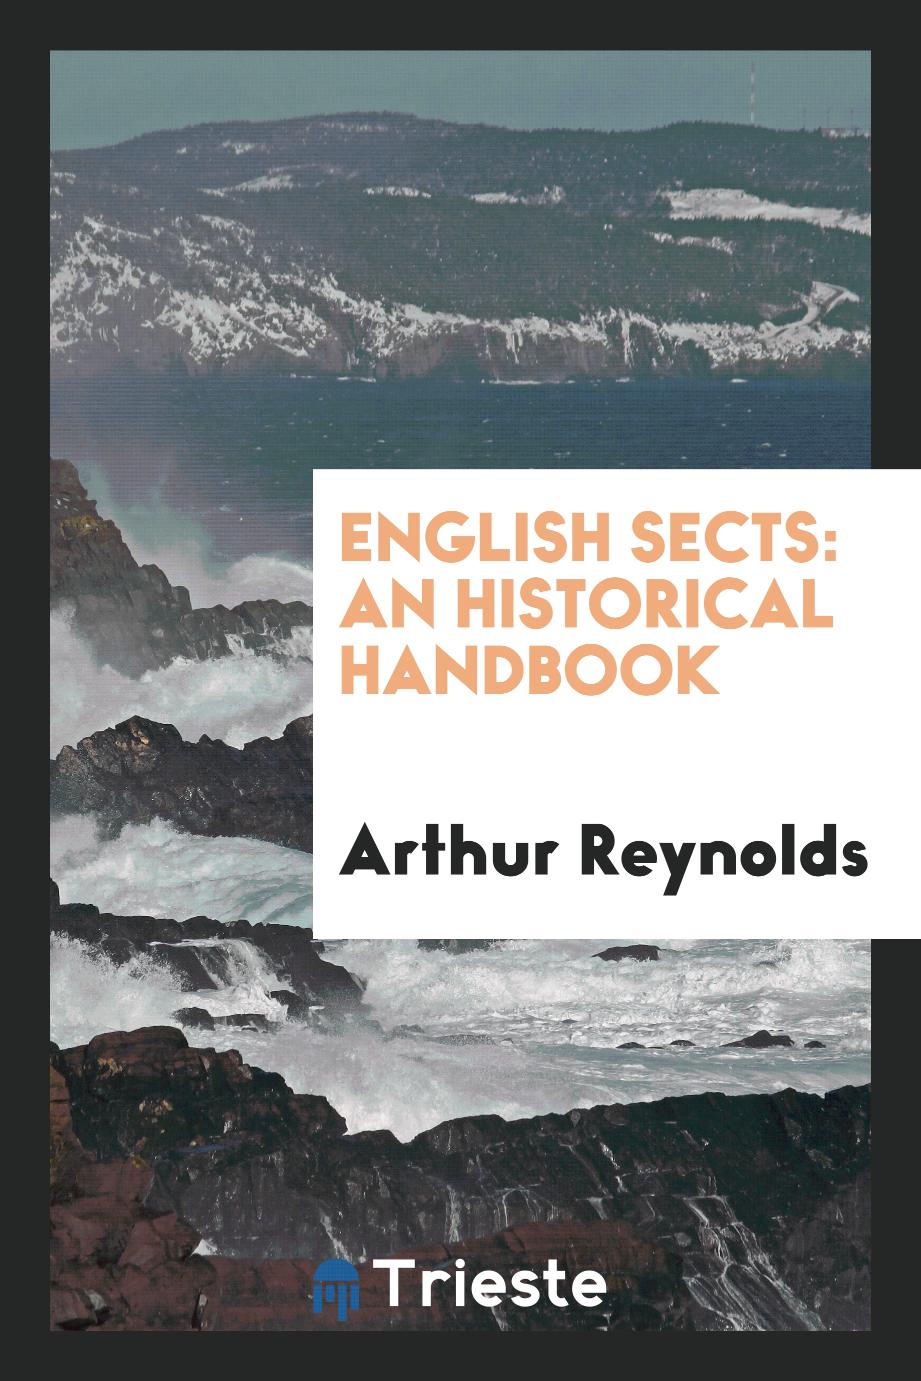 English sects: an historical handbook